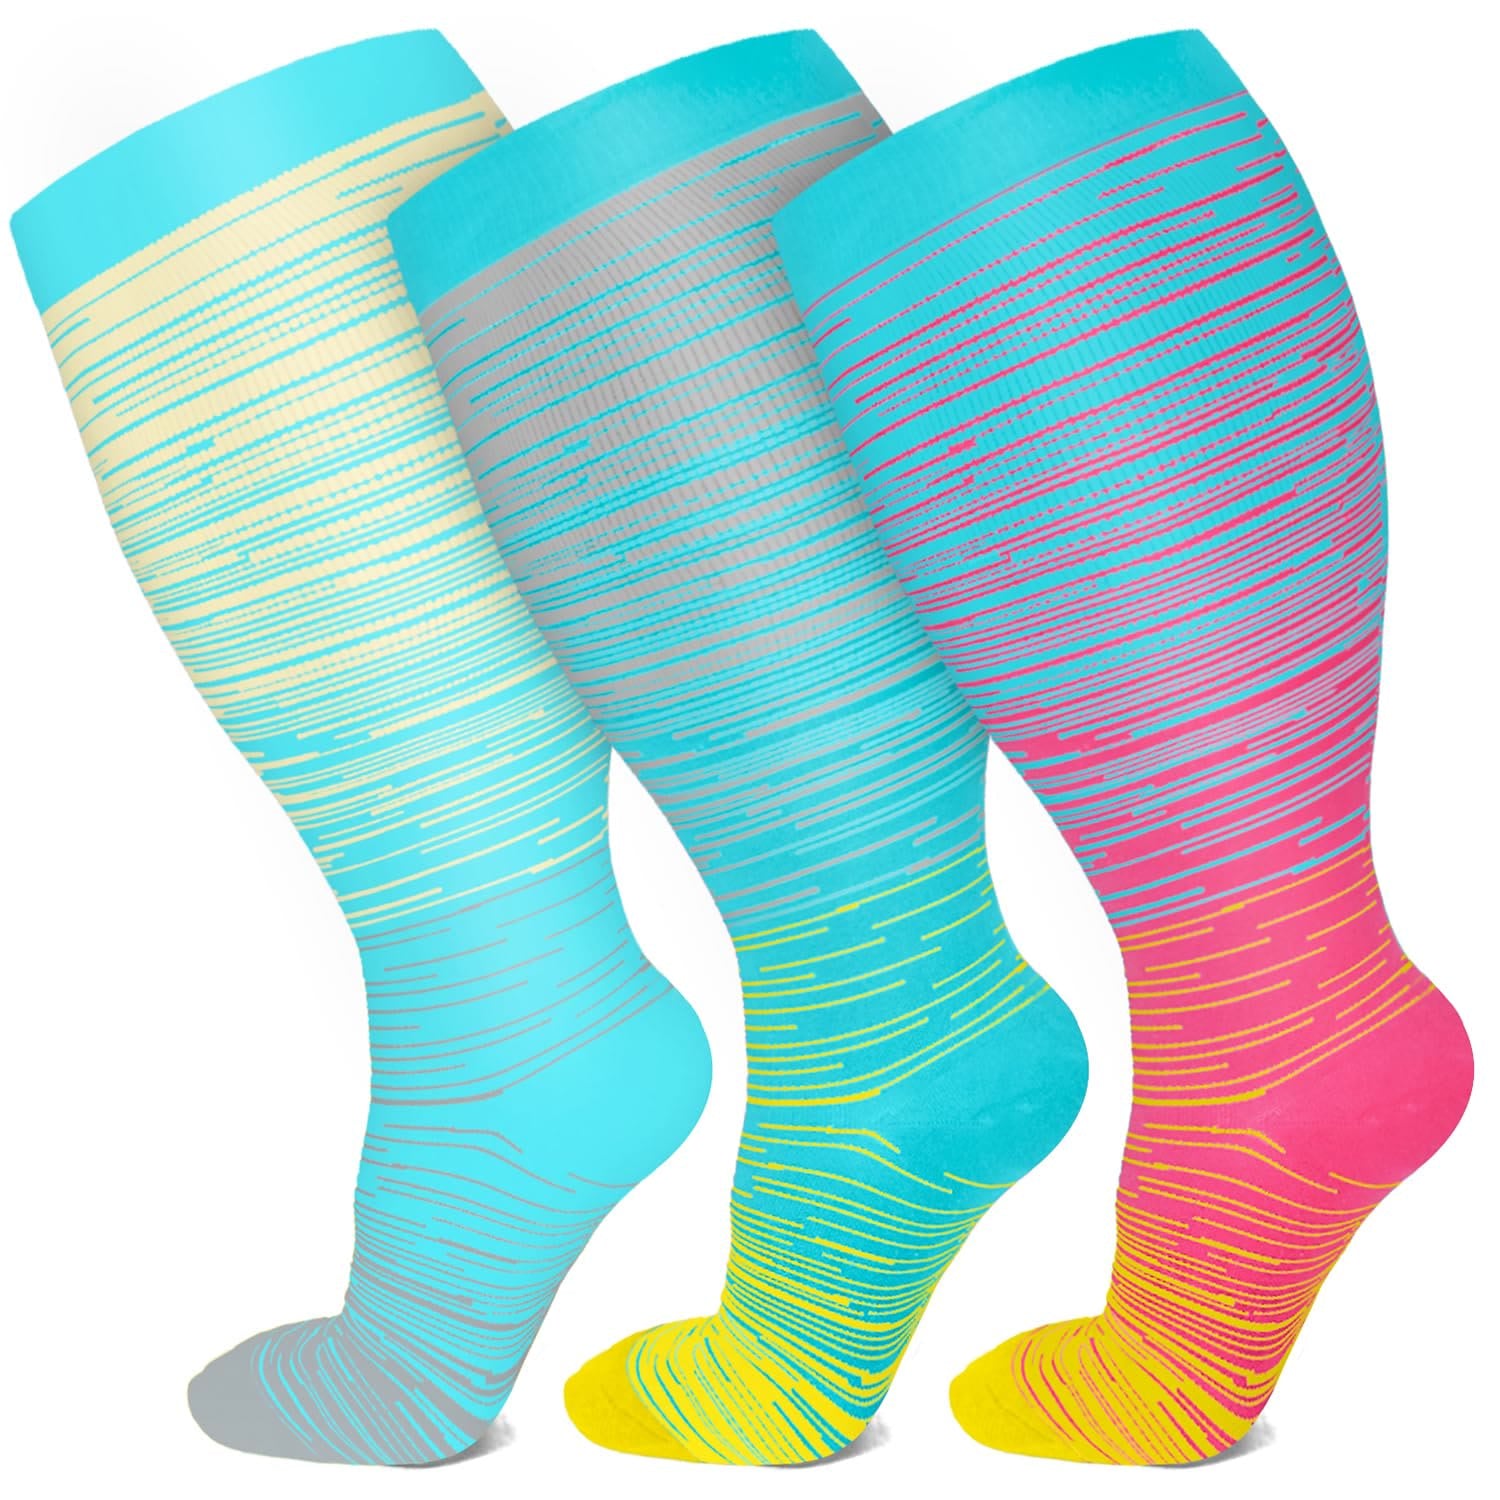 2XL-7XL Plus Size Bright Stripe Compression Socks